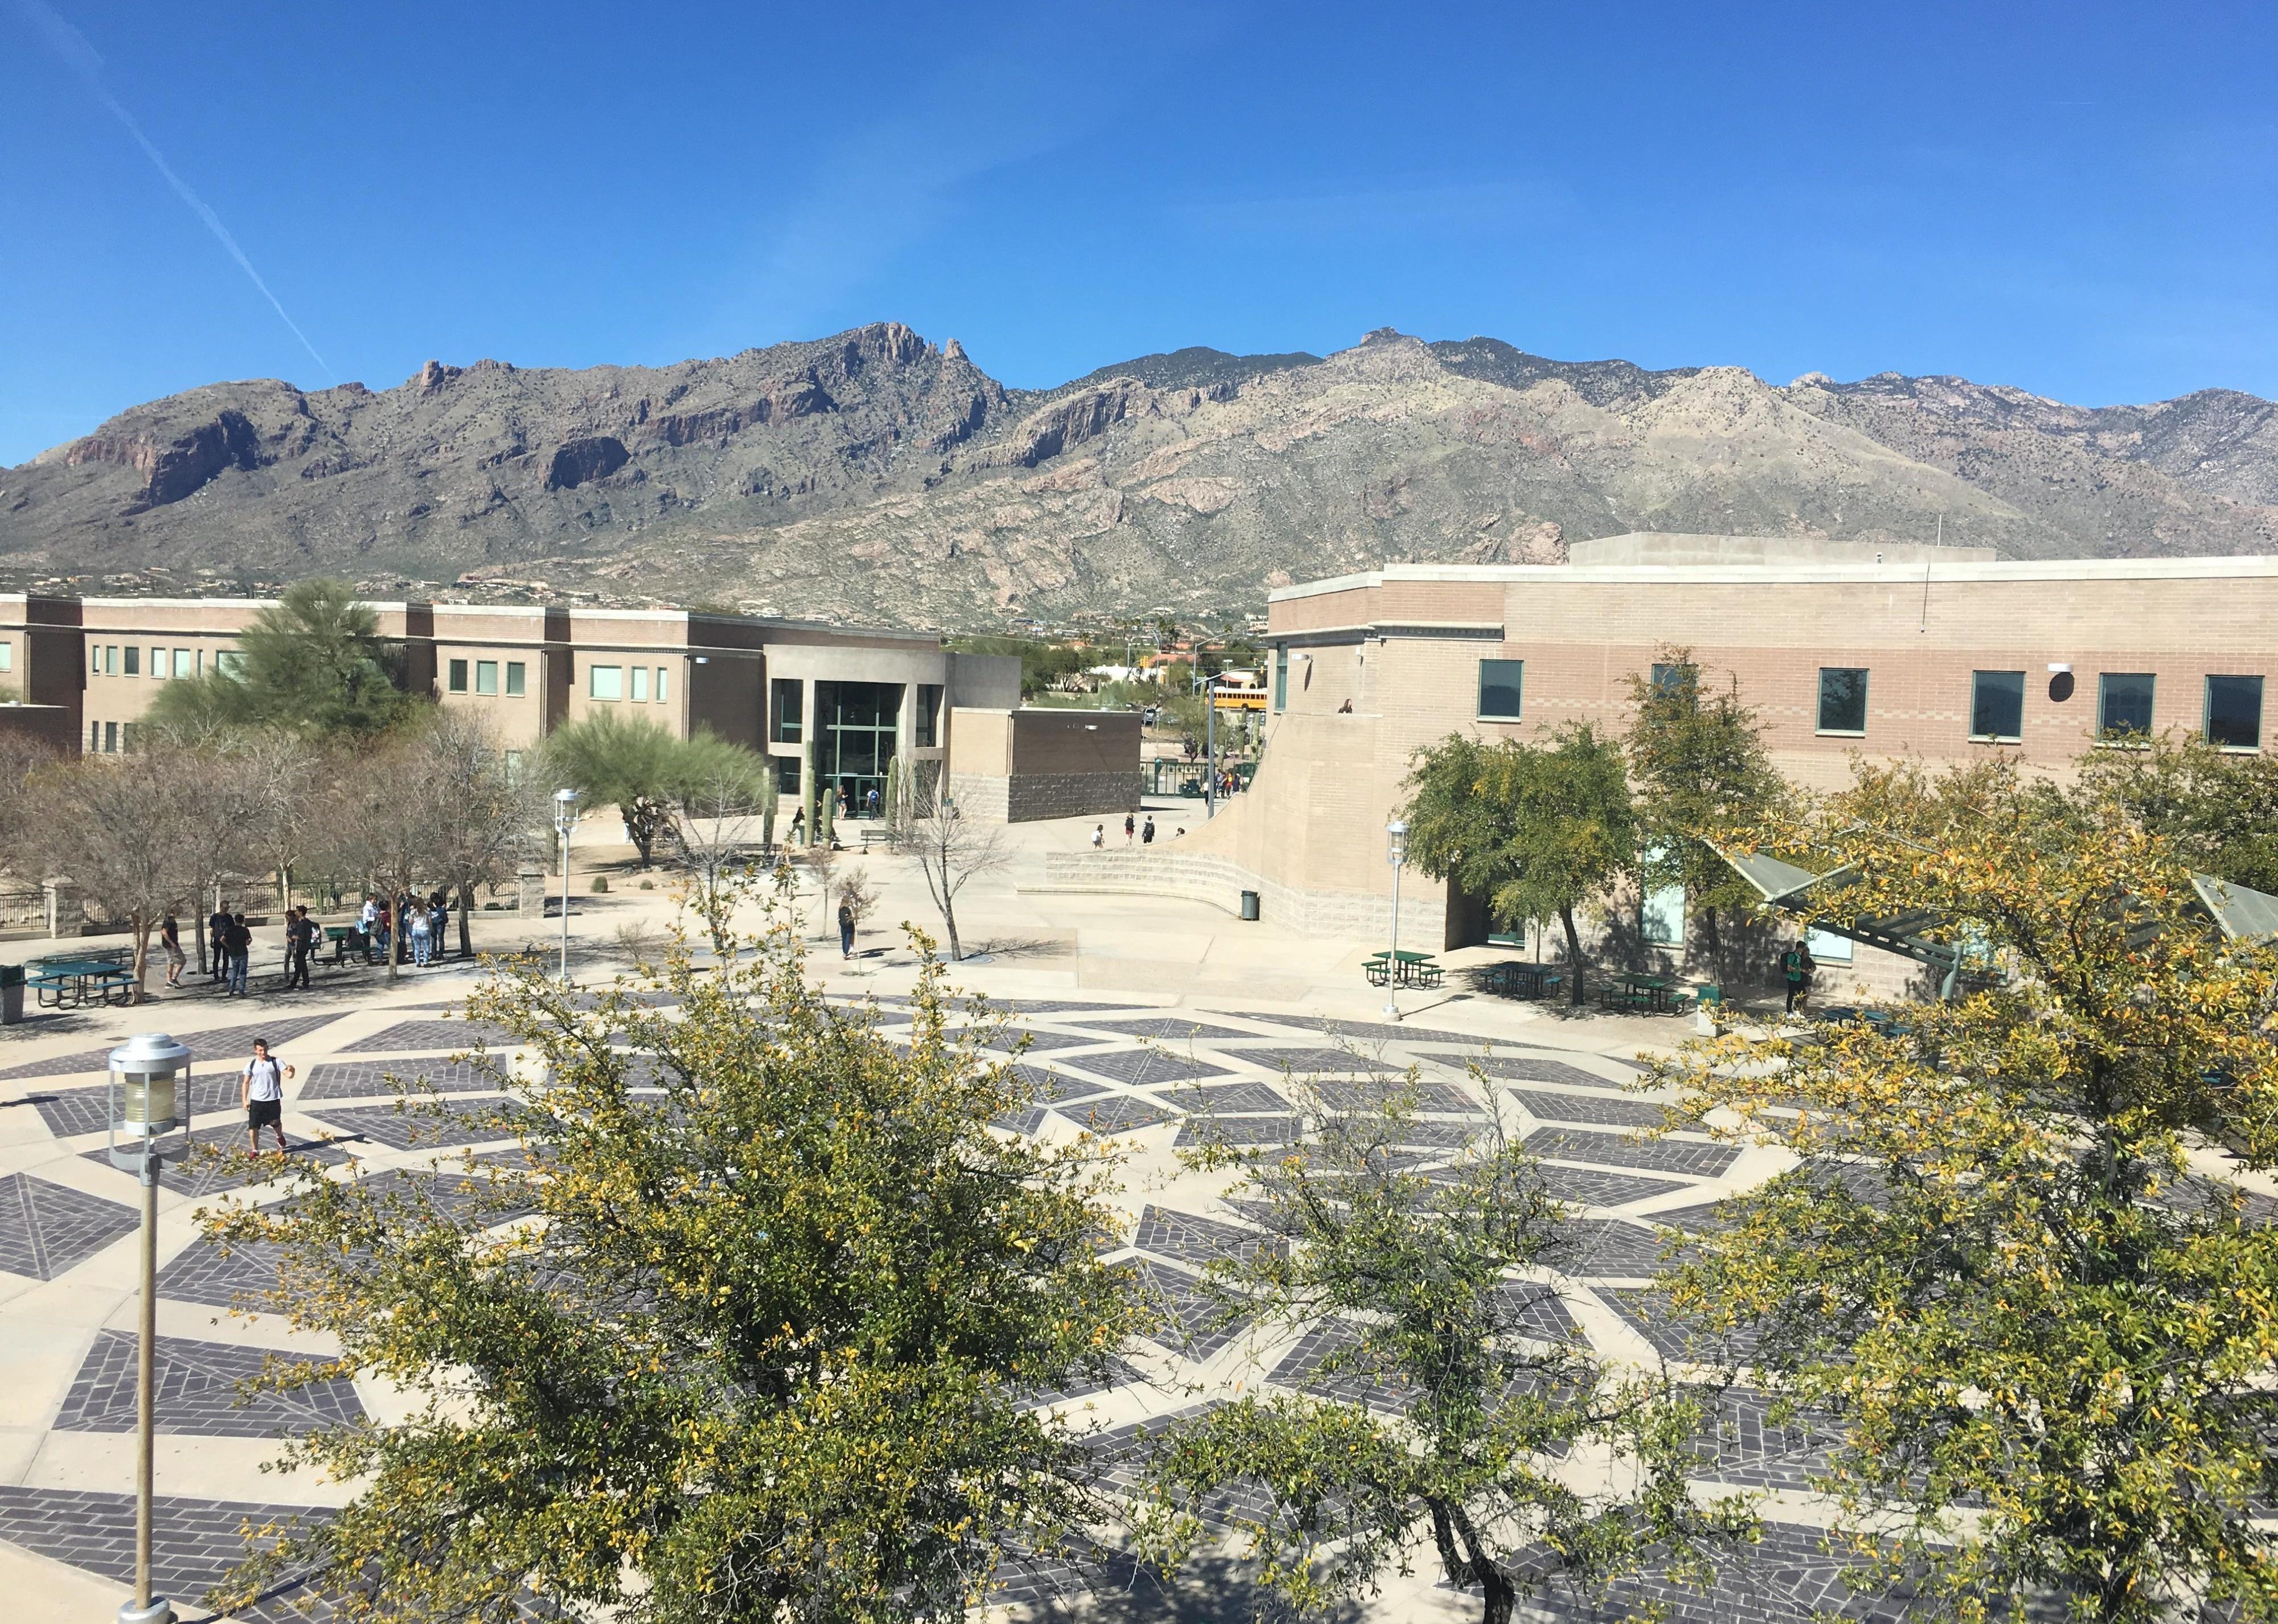 A school in a desert landscape.